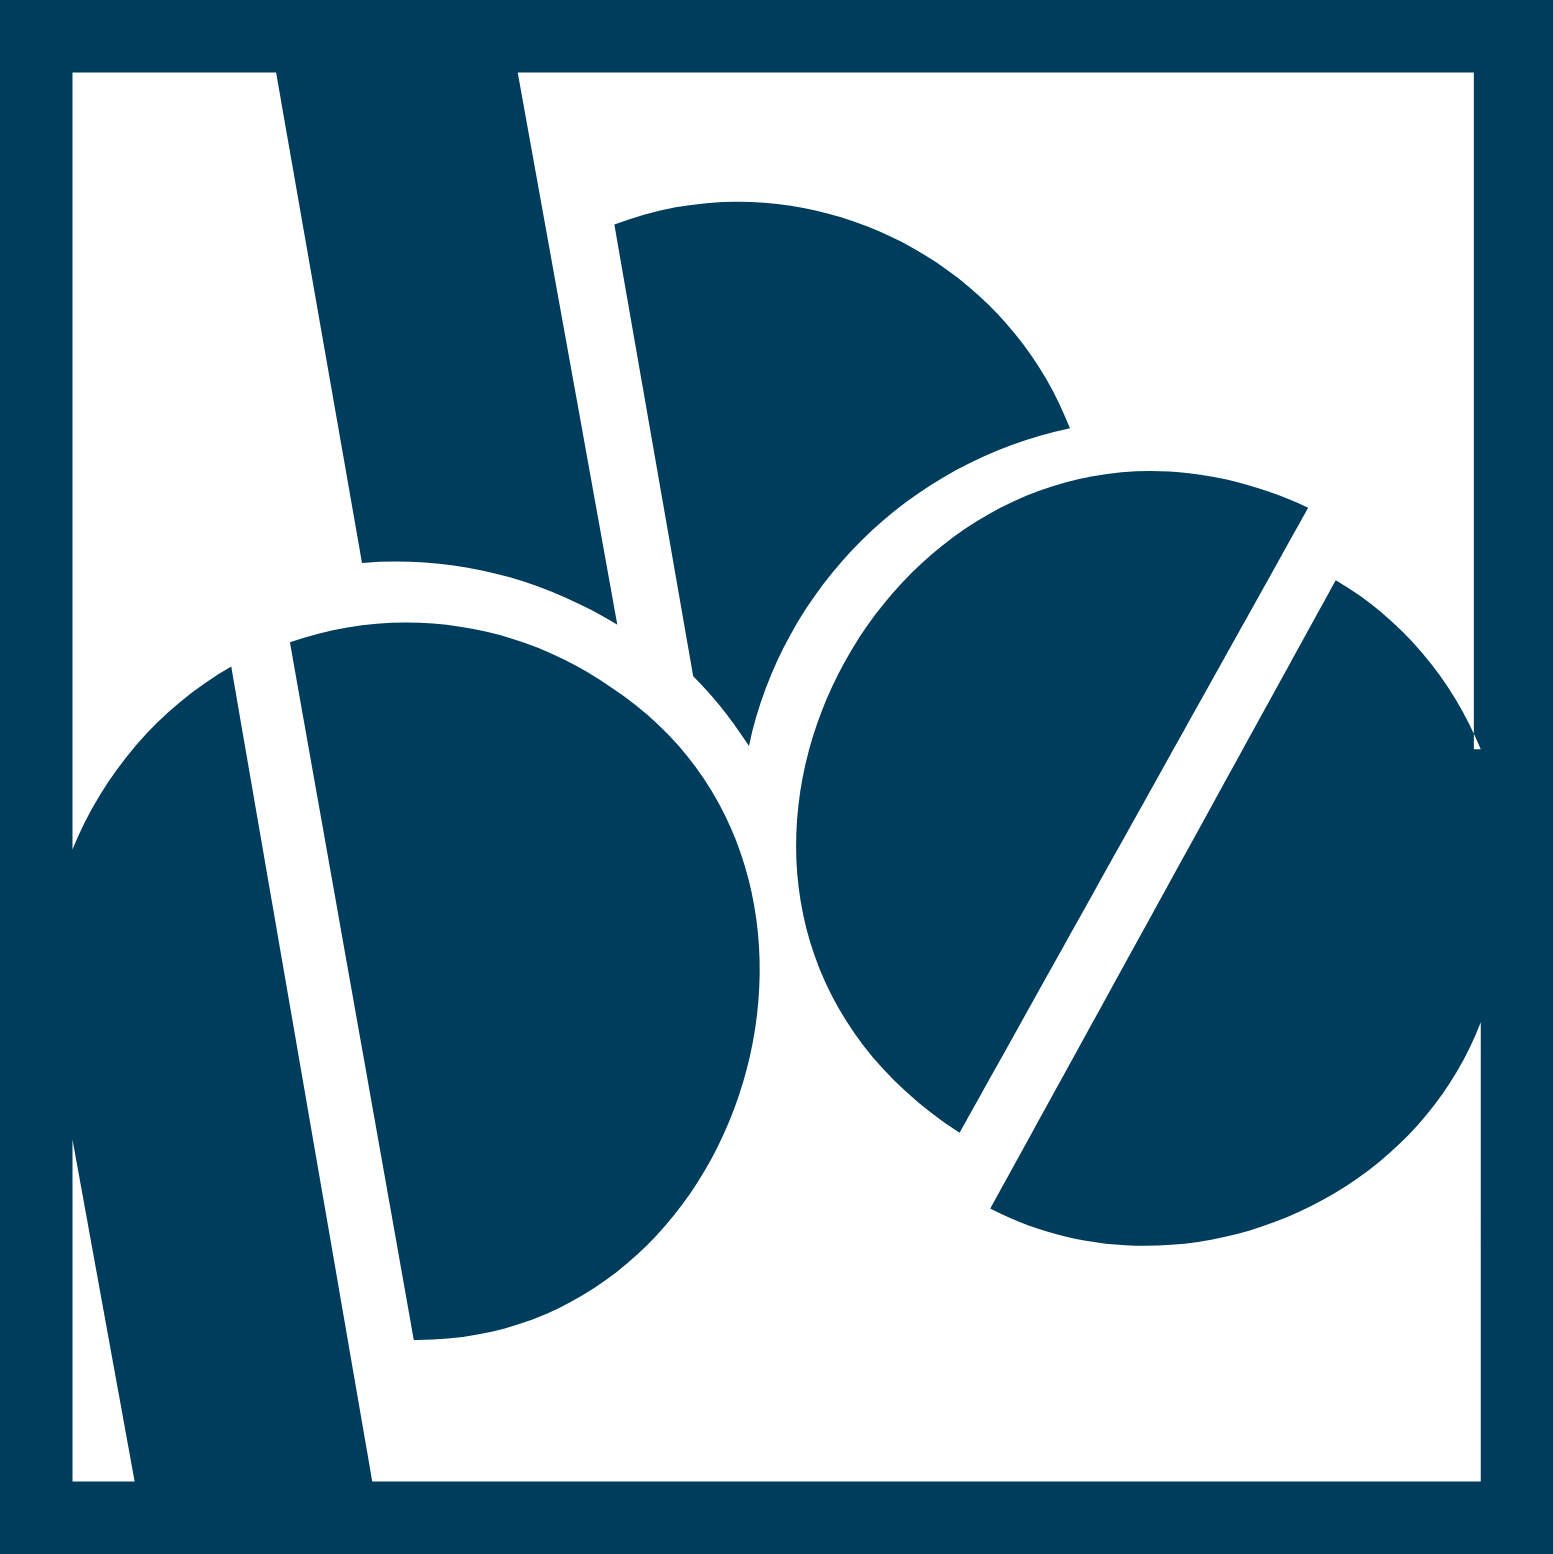 Banca Popolare di Sondrio logo (PNG transparent)